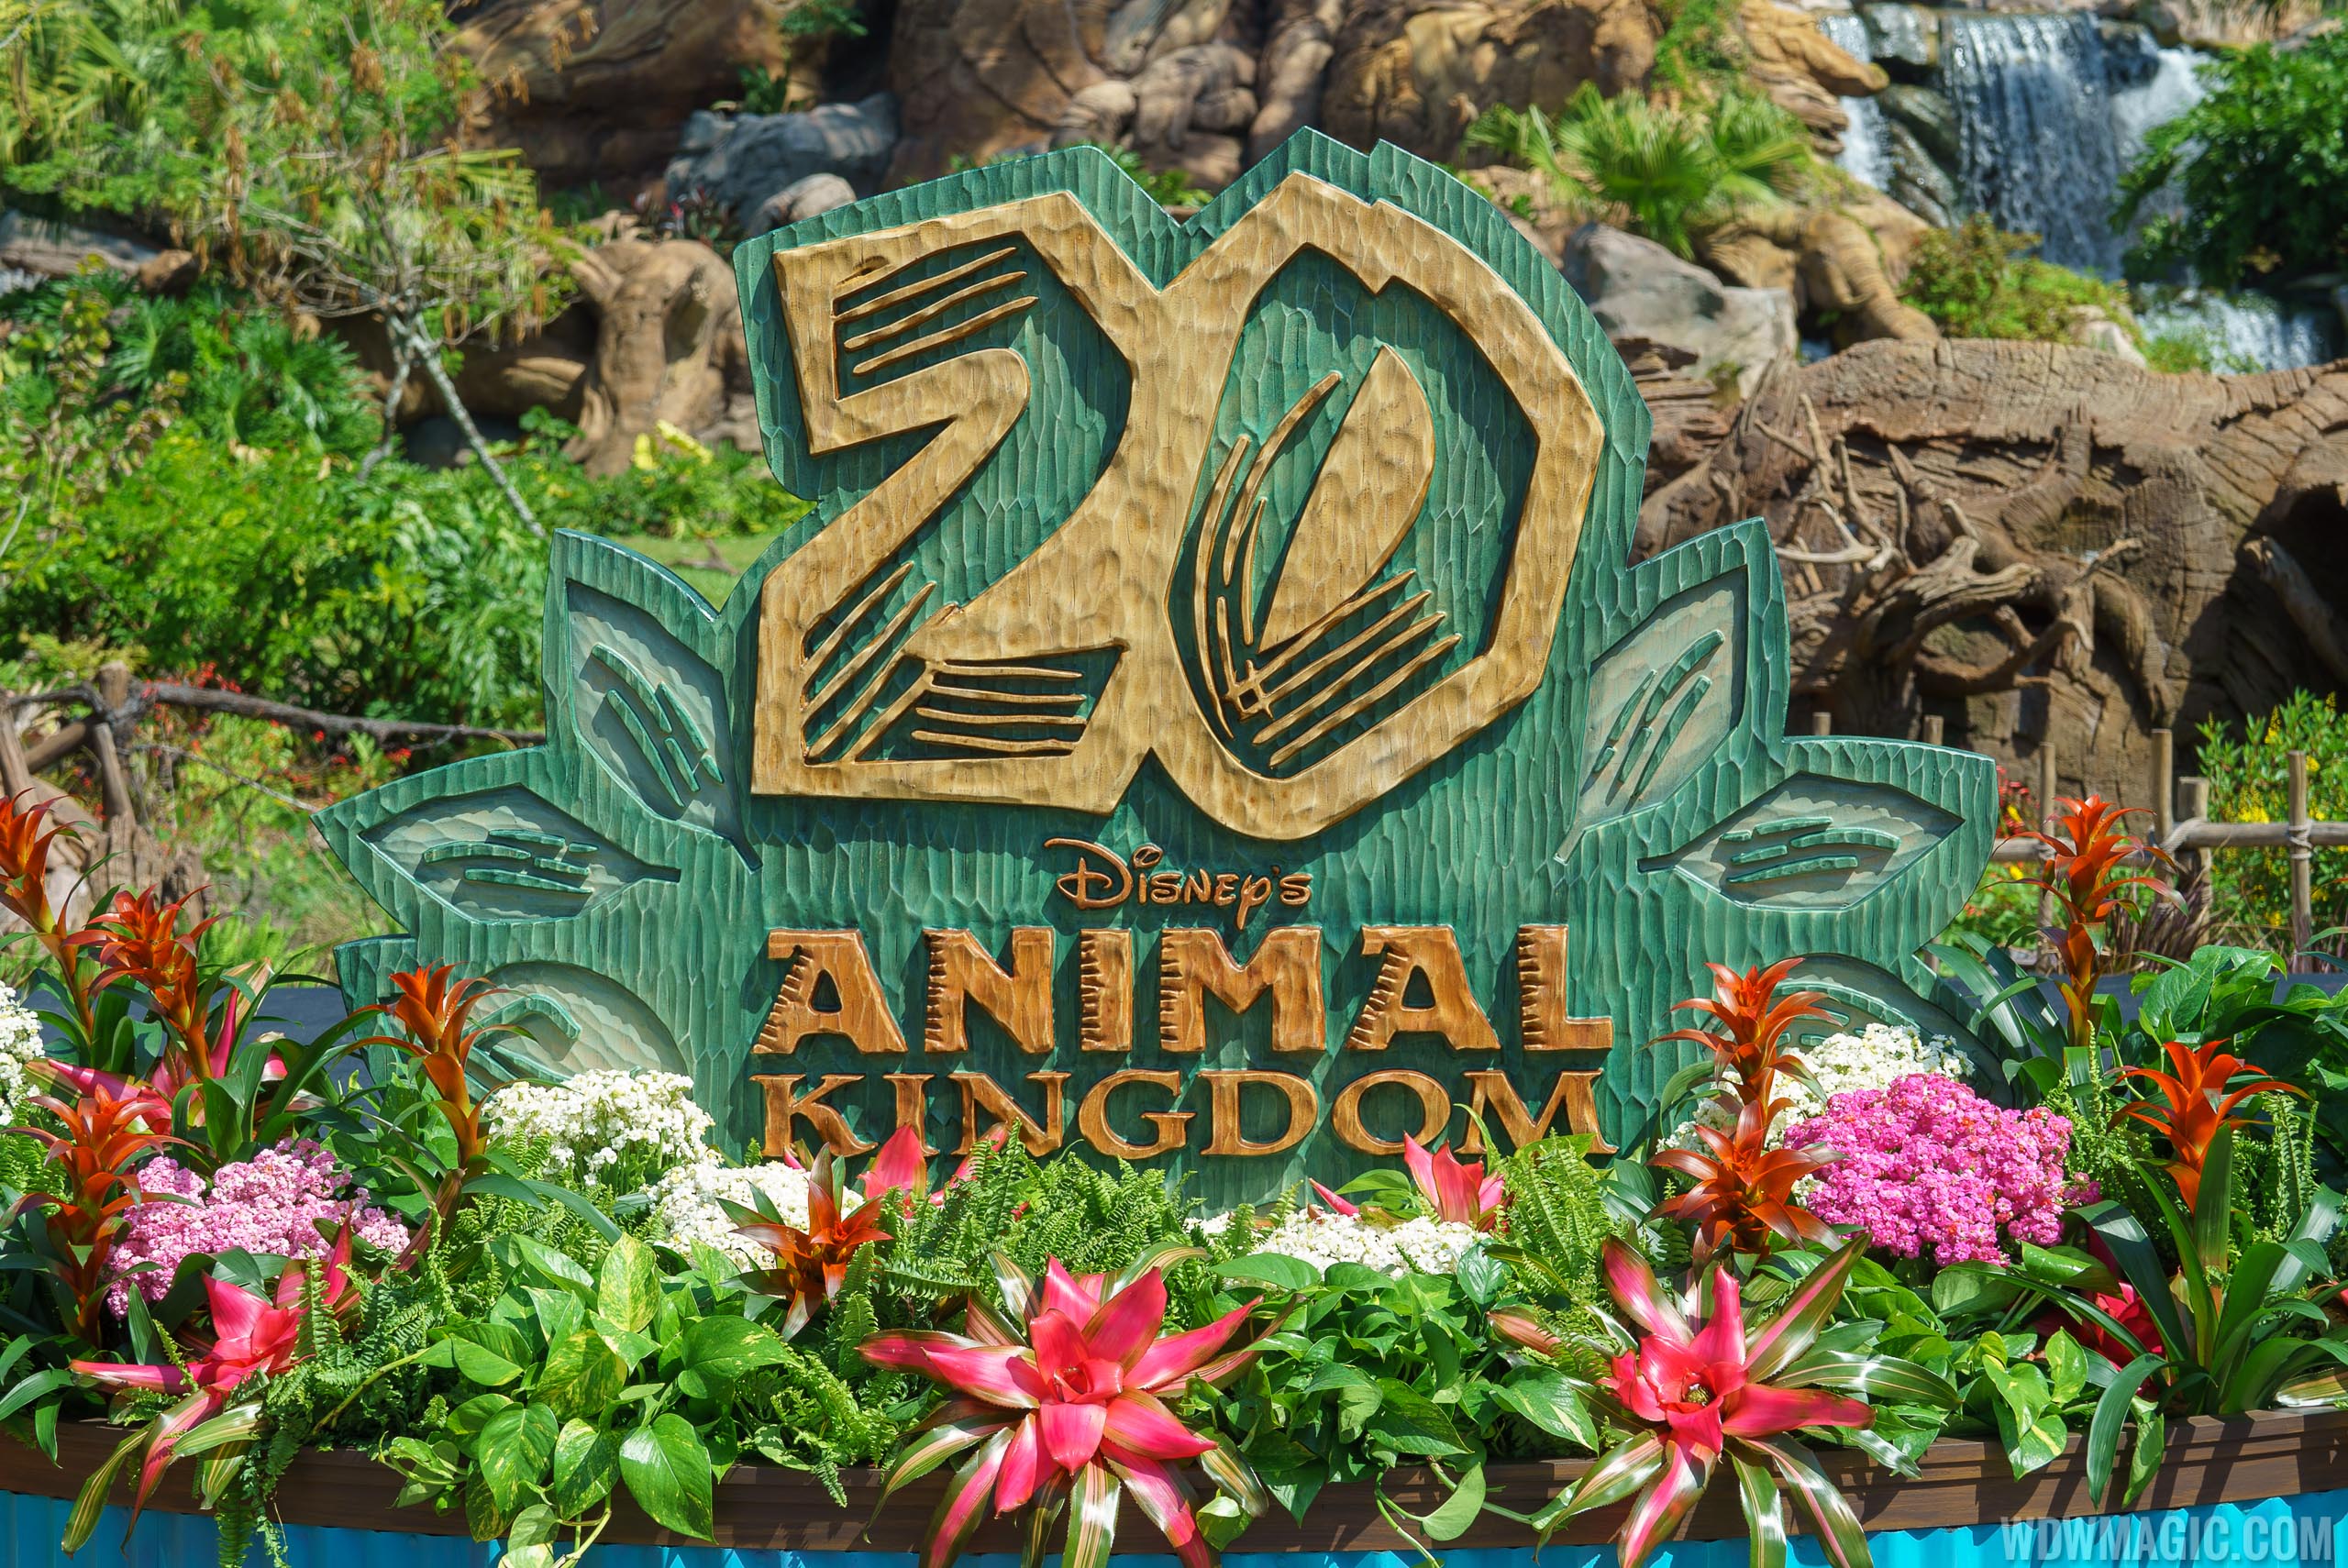 Disney's Animal Kingdom celebrates 20 years years of adventure